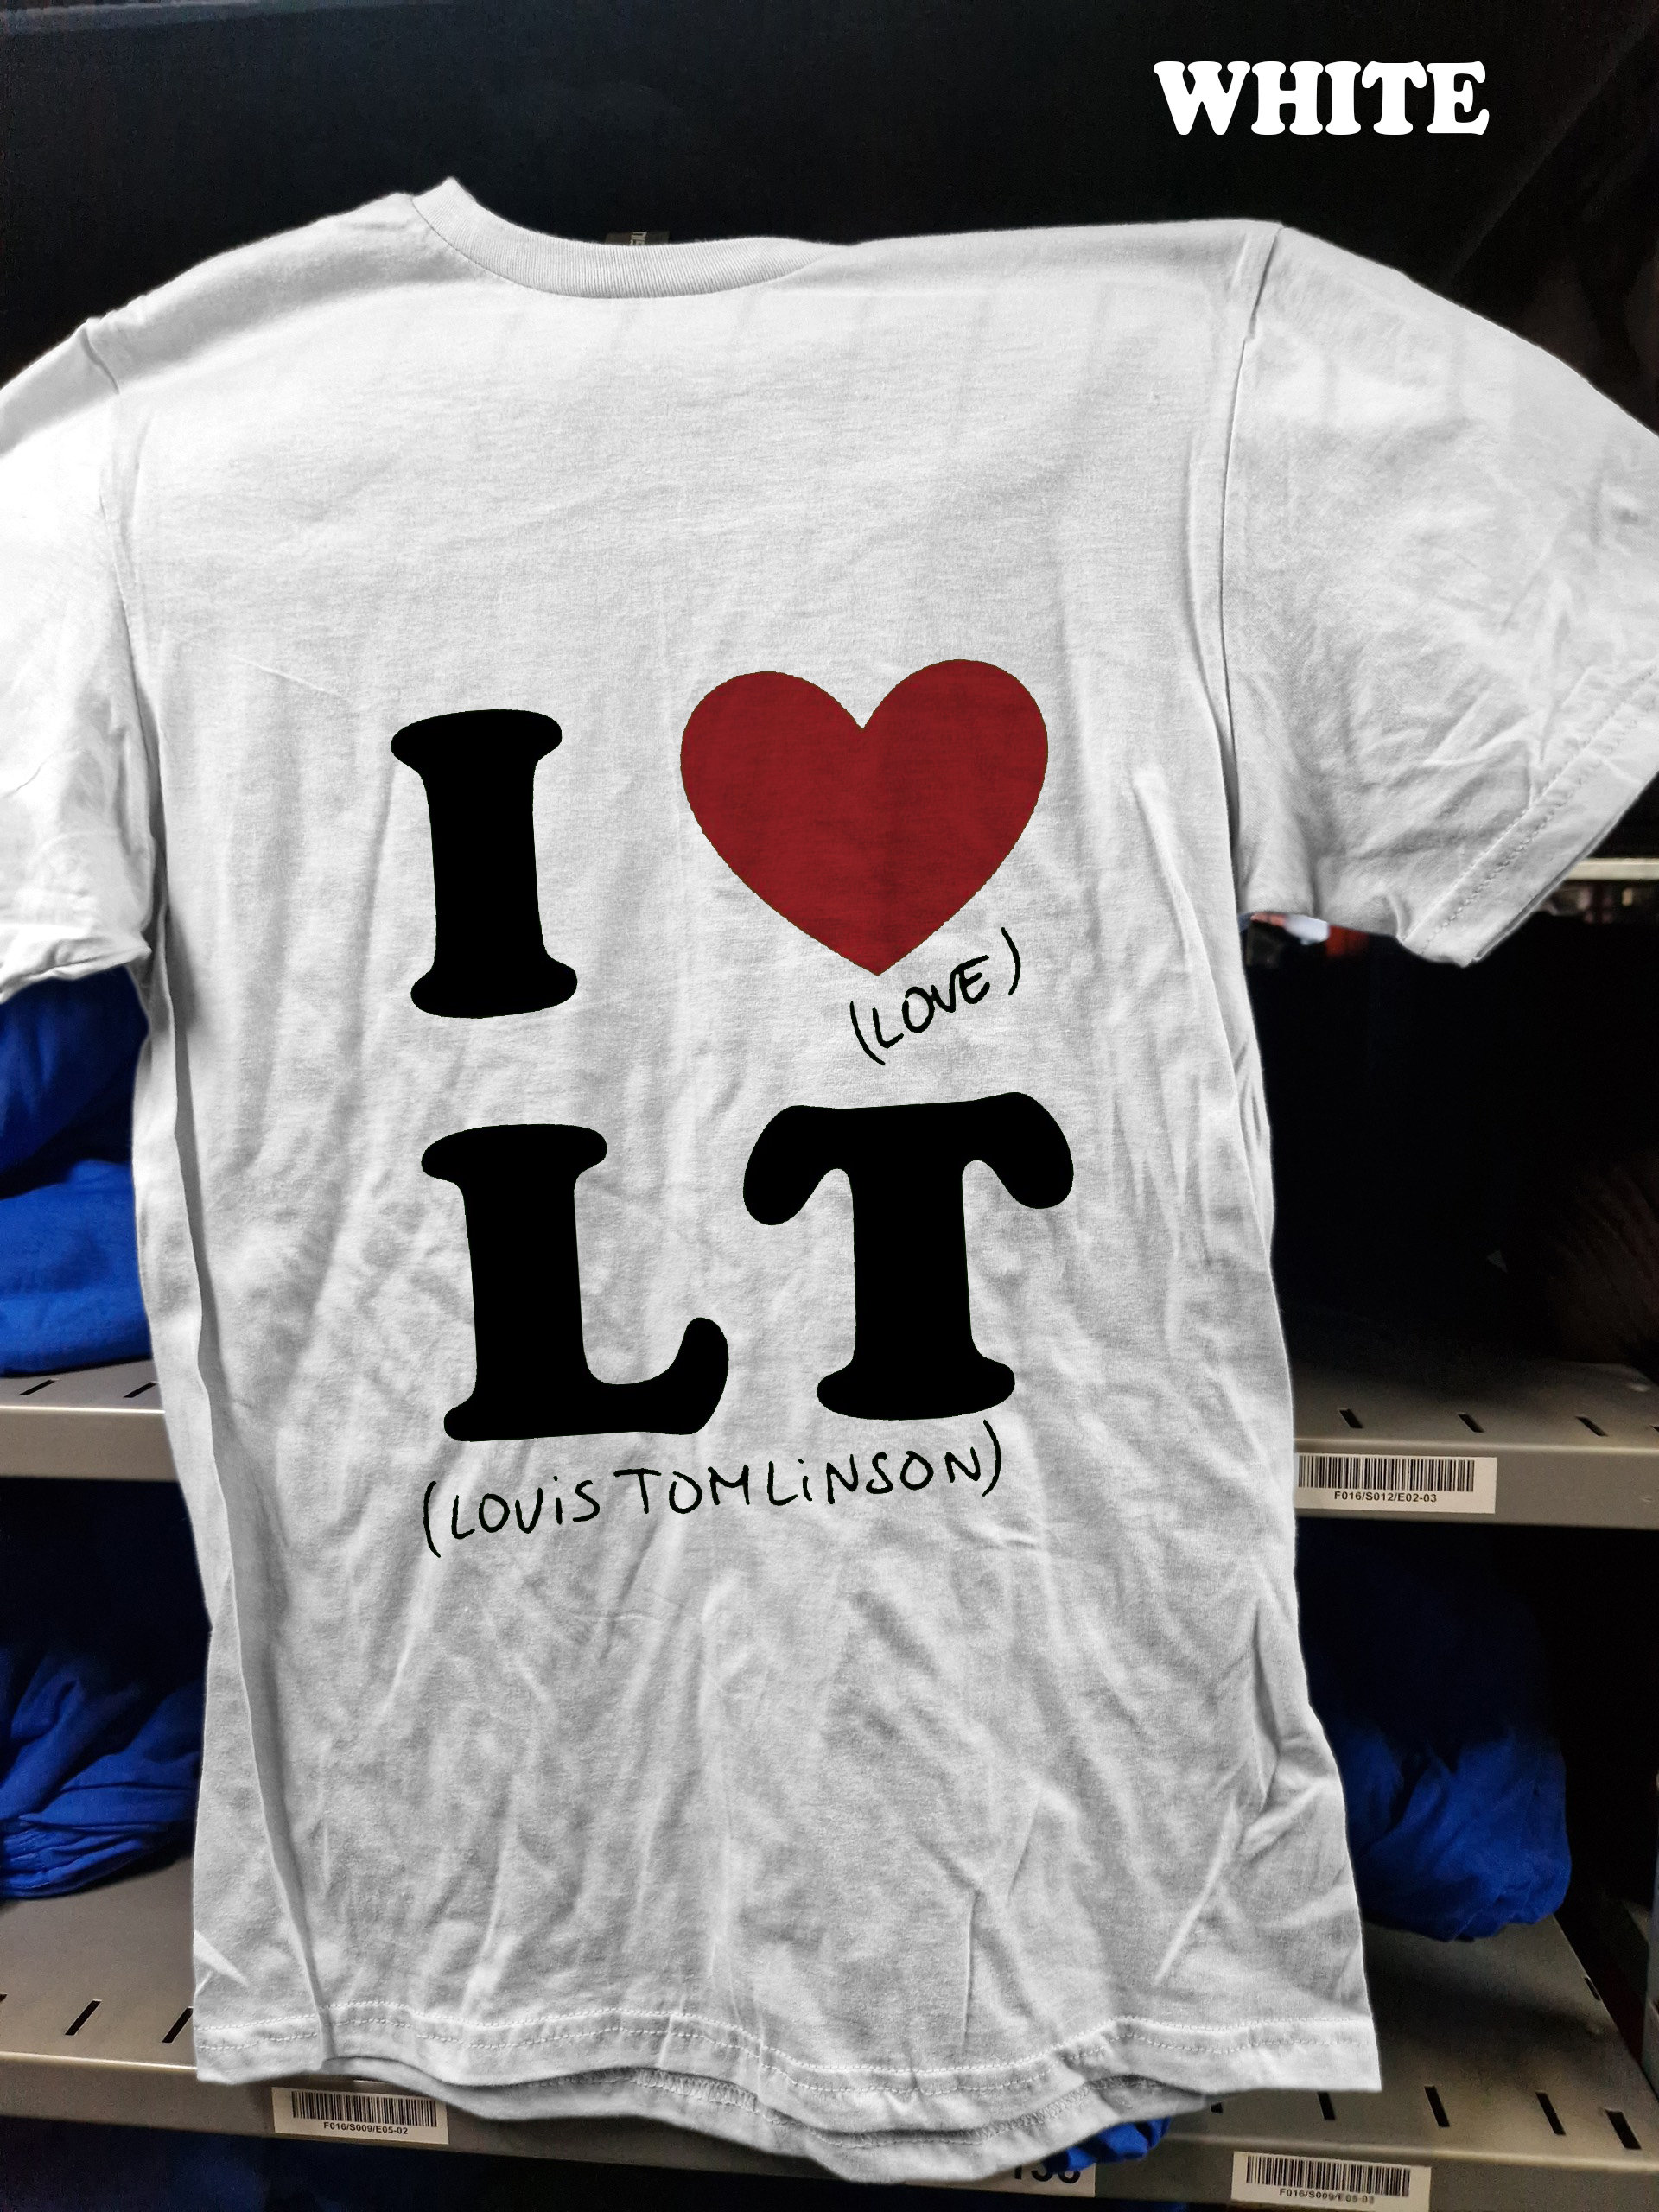 Eletees Louis Tomlinson I Love My Boyfriend Shirt